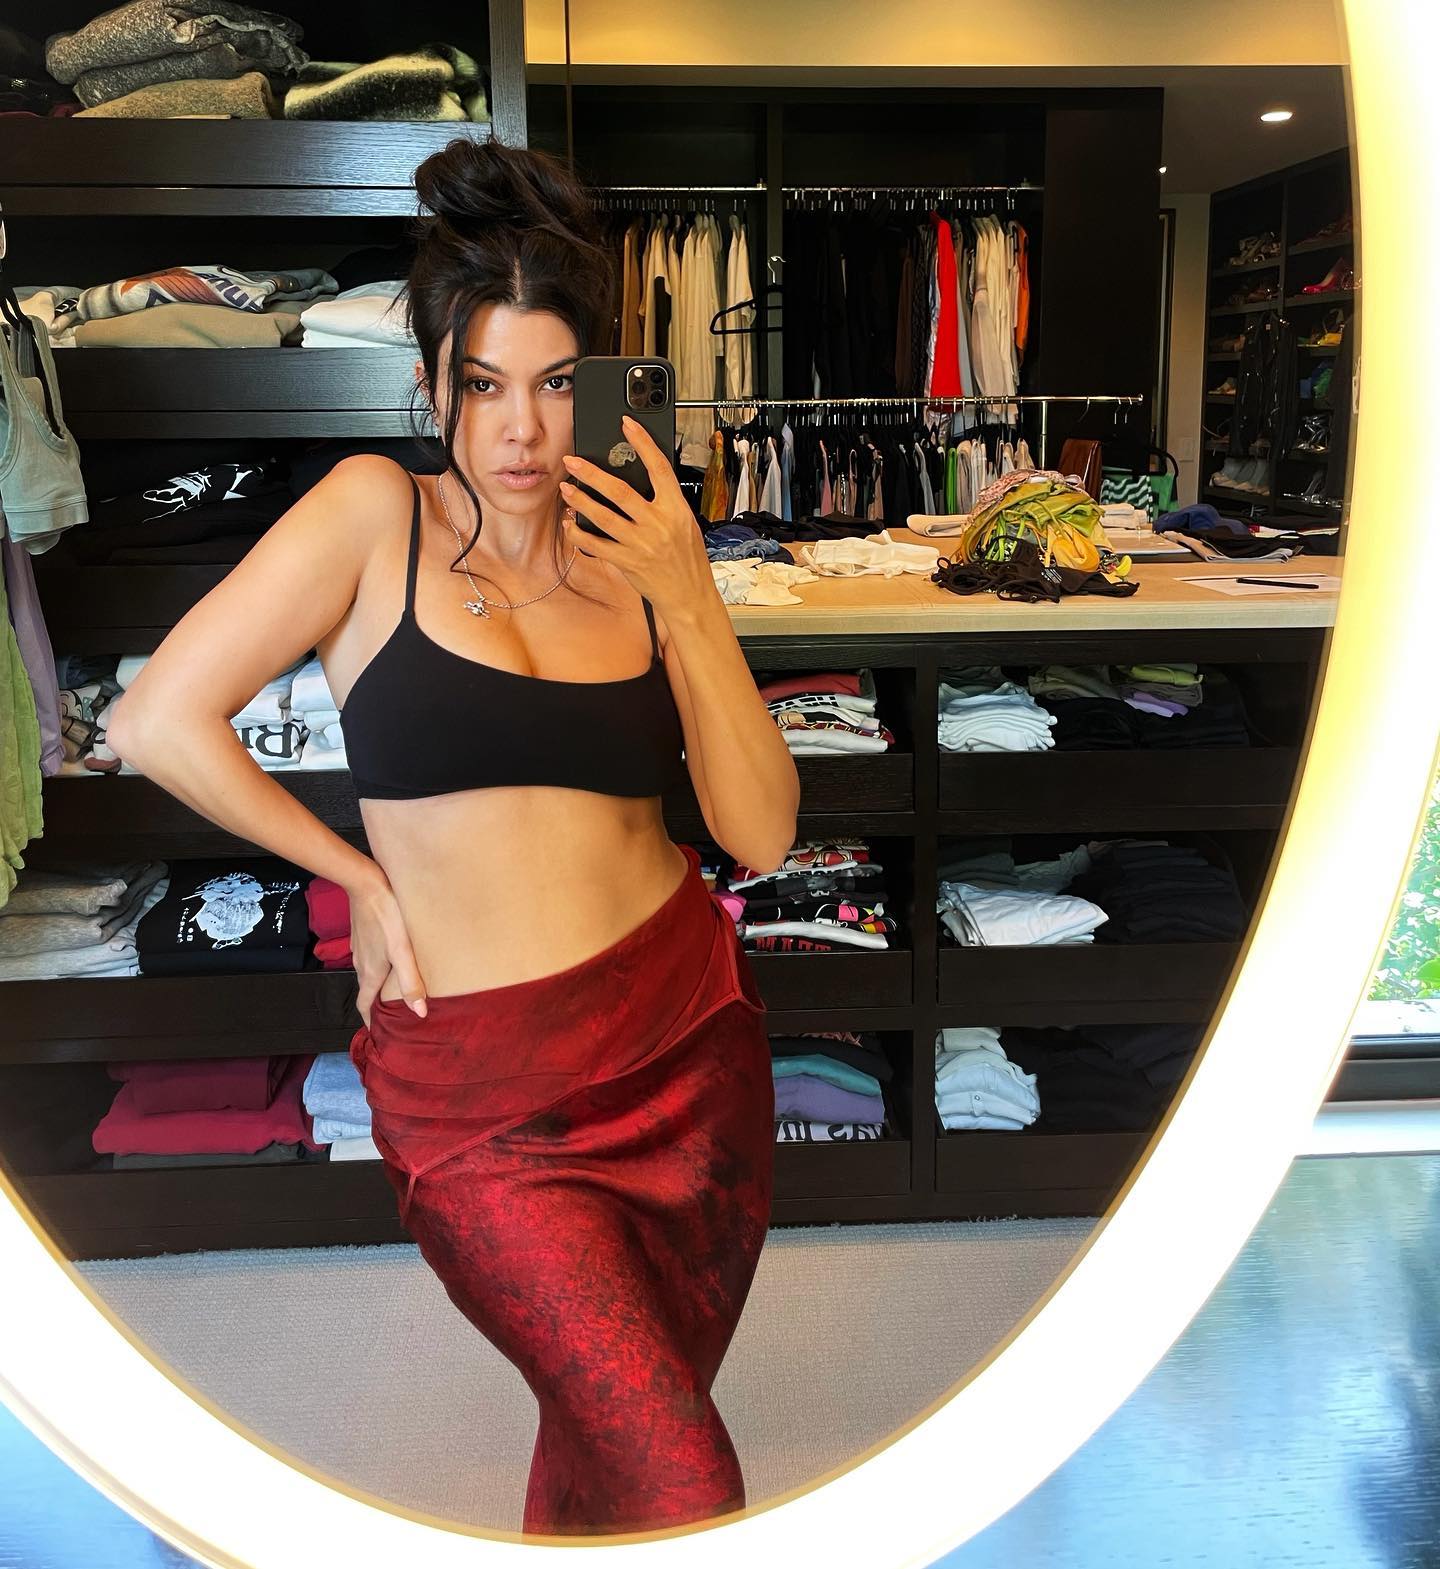 Kylie Jenner's purse closet tour will make you jealous